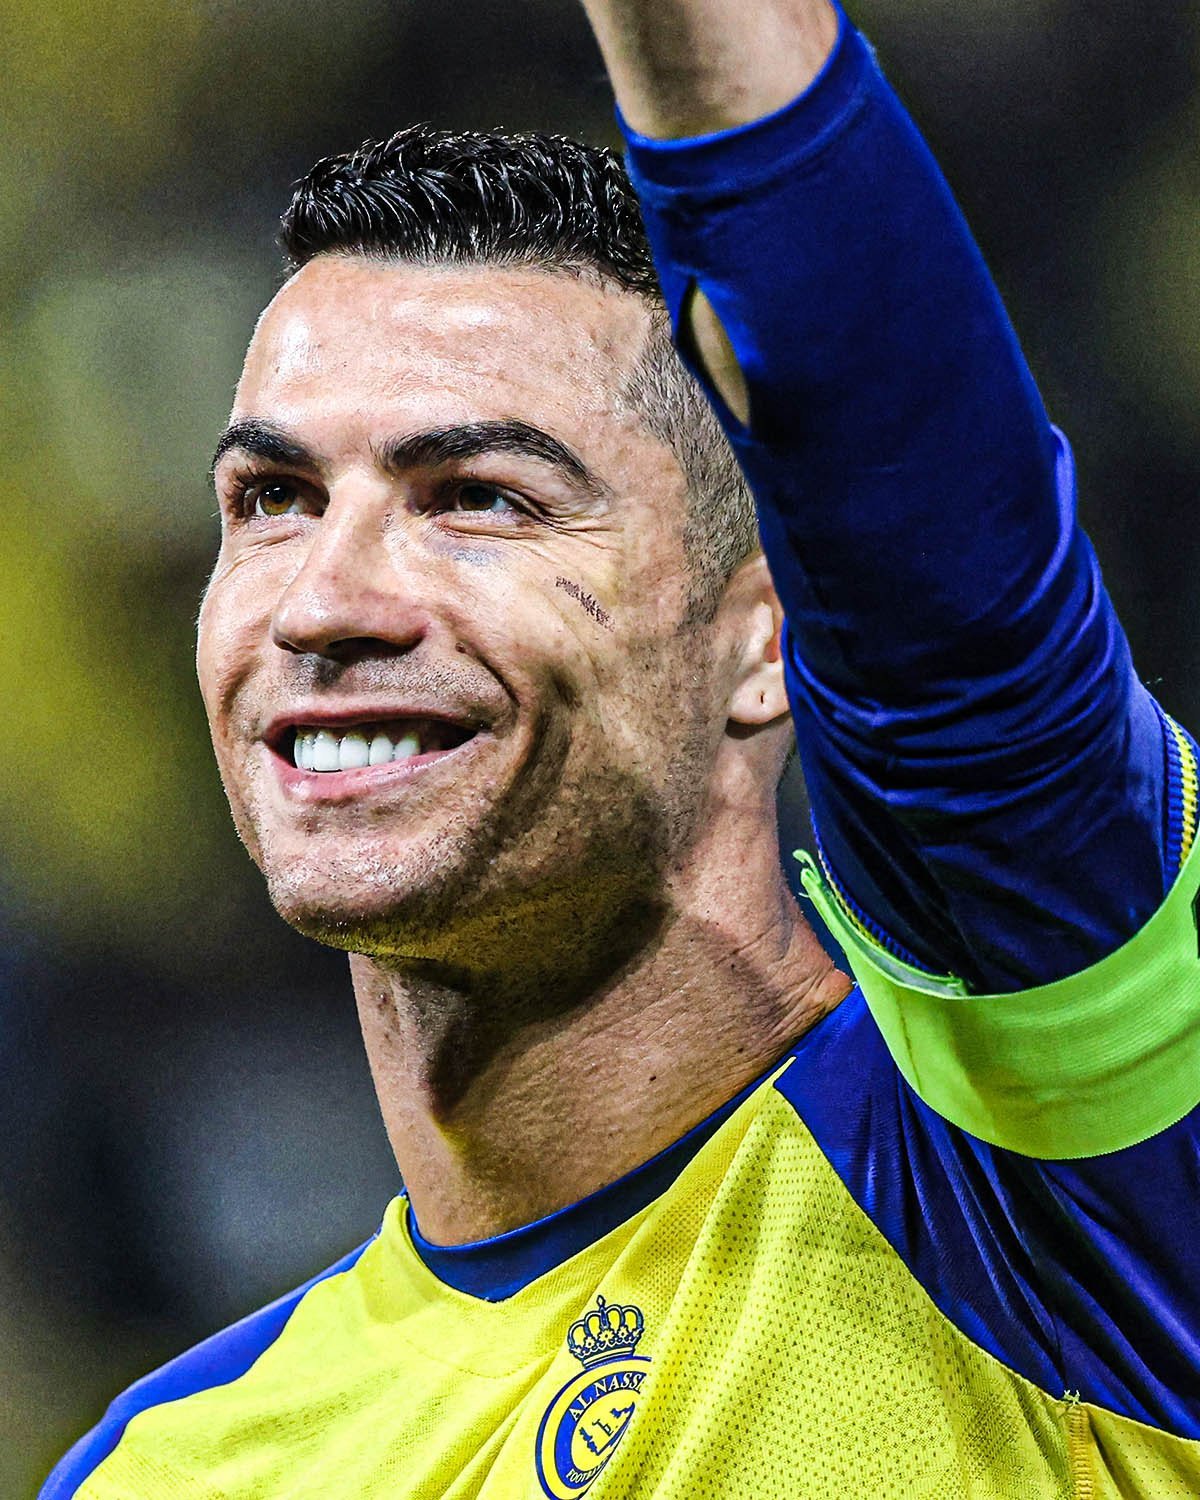 Cristiano Ronaldo Inspired Haircut Tutorial | TheSalonGuy - YouTube